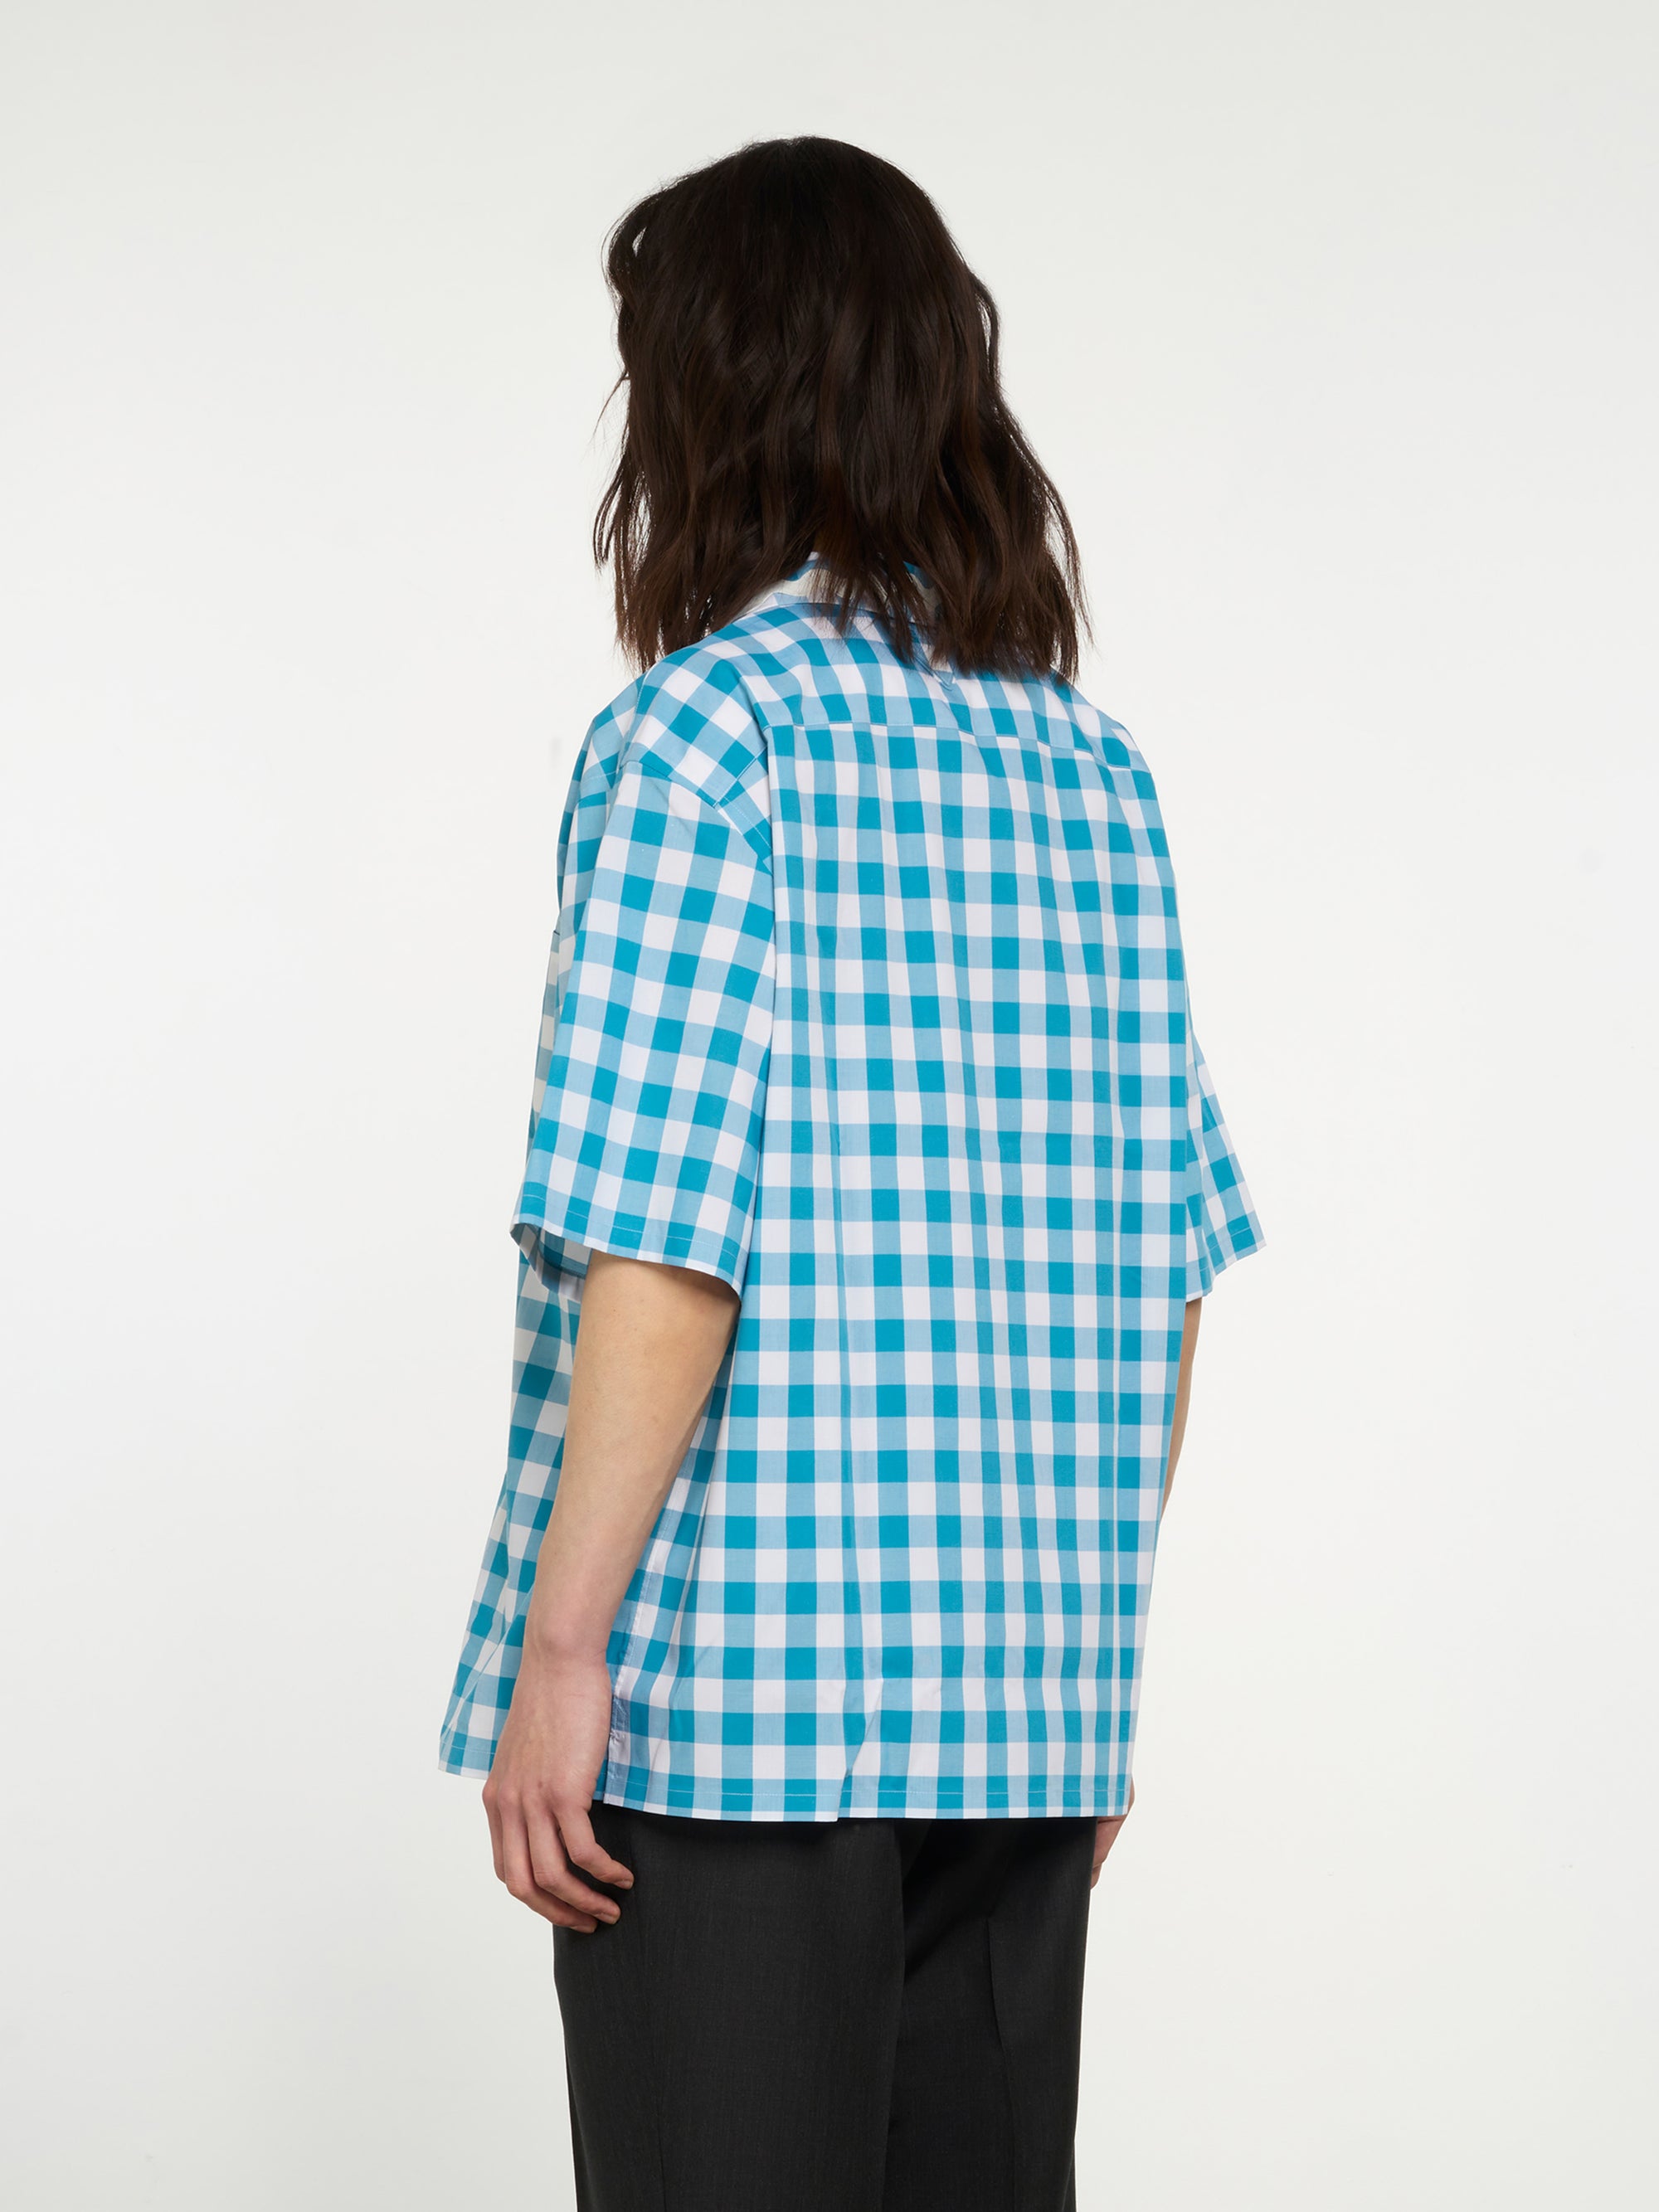 Prada - Men’s Check Shirt - (White/Turquoise) view 3